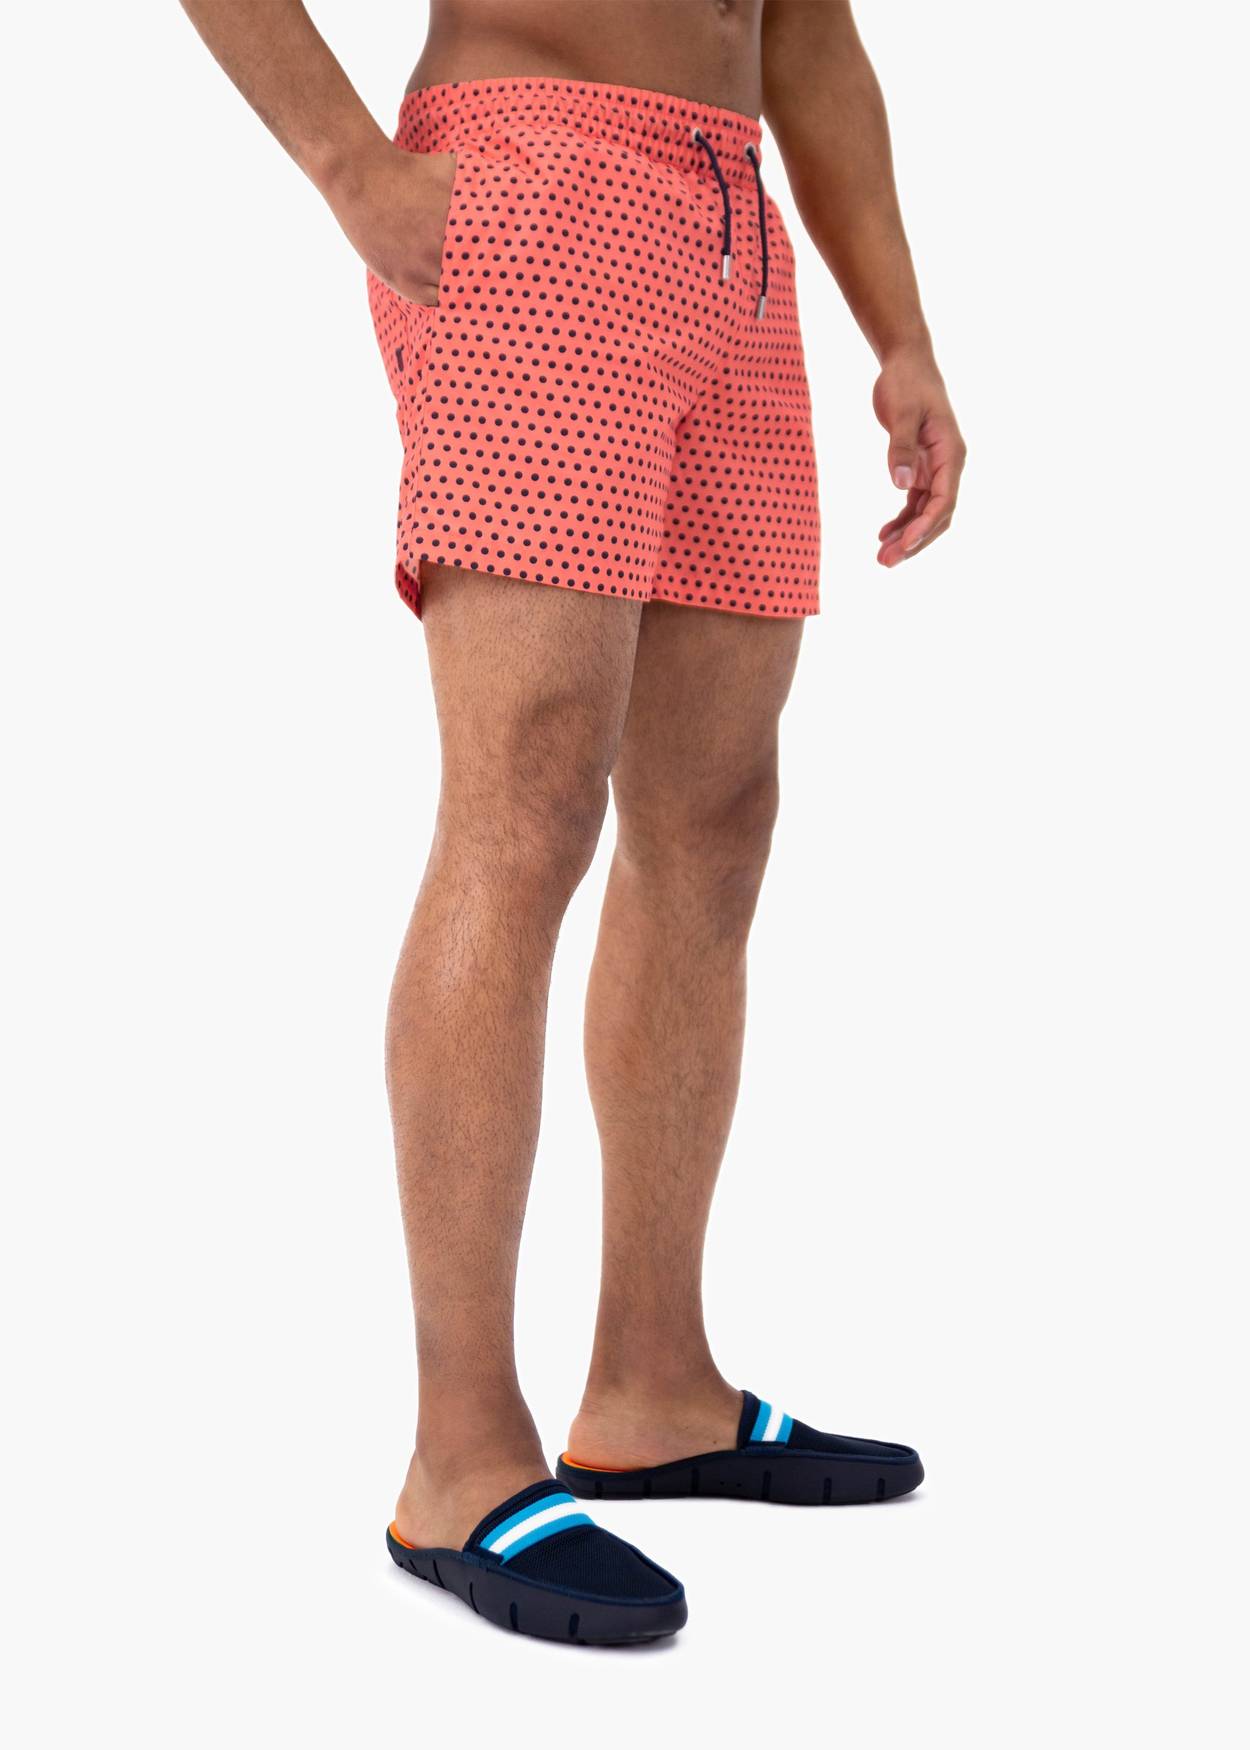 The Printed Swim Shorts